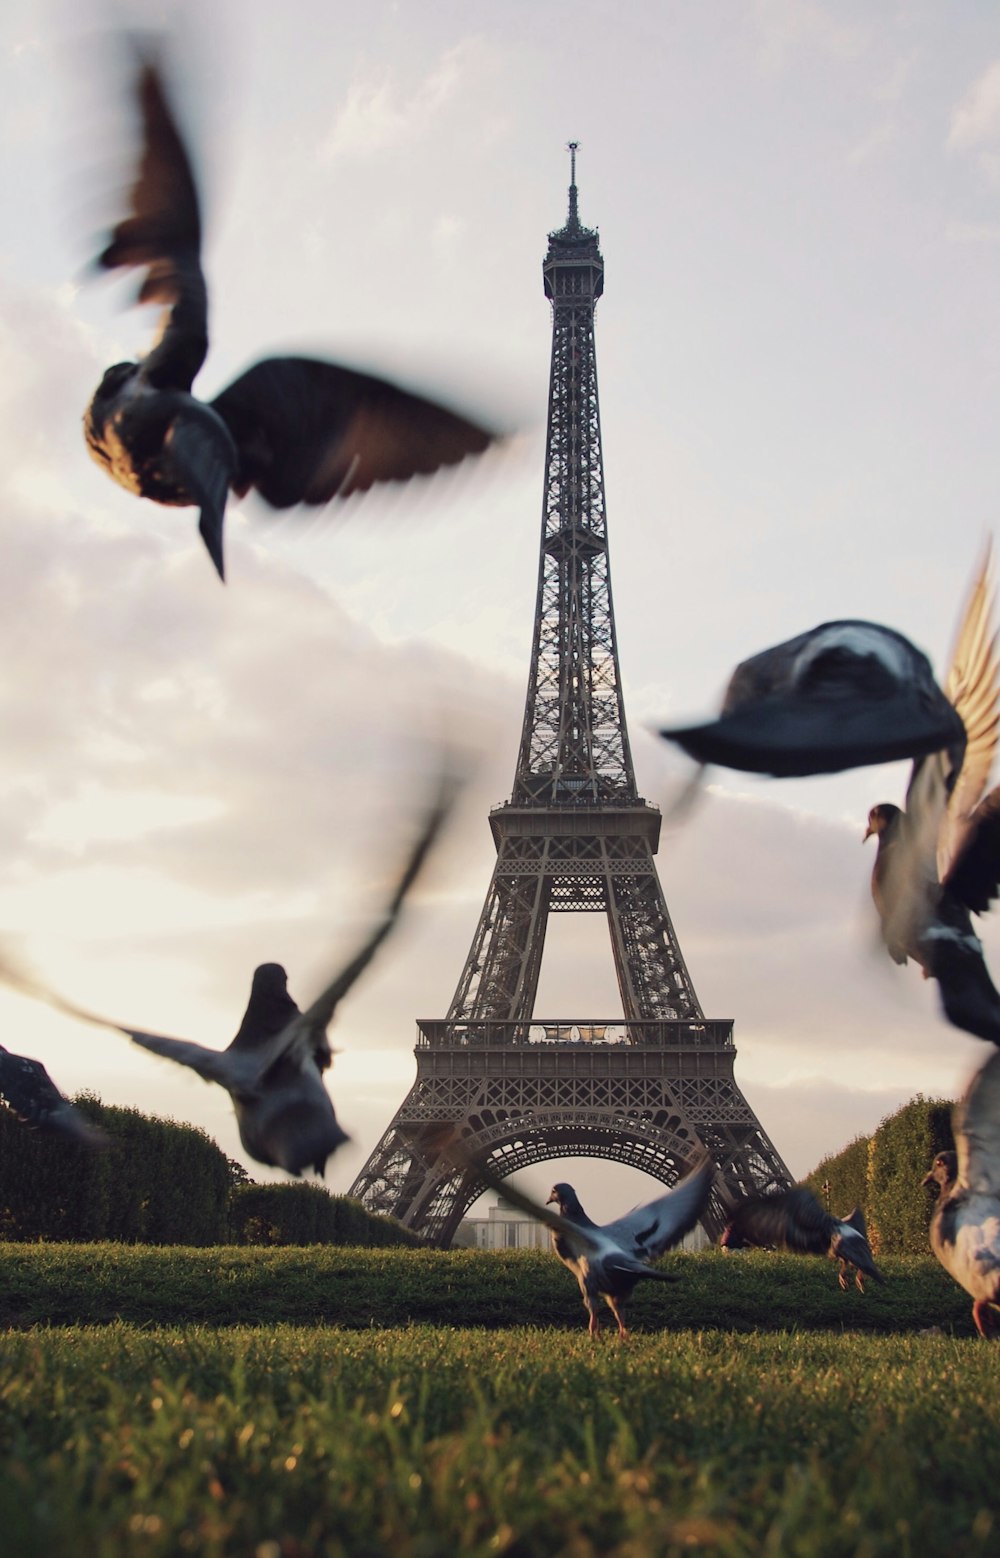 flight of pigeons flying above grass field near Eiffel tower in Paris